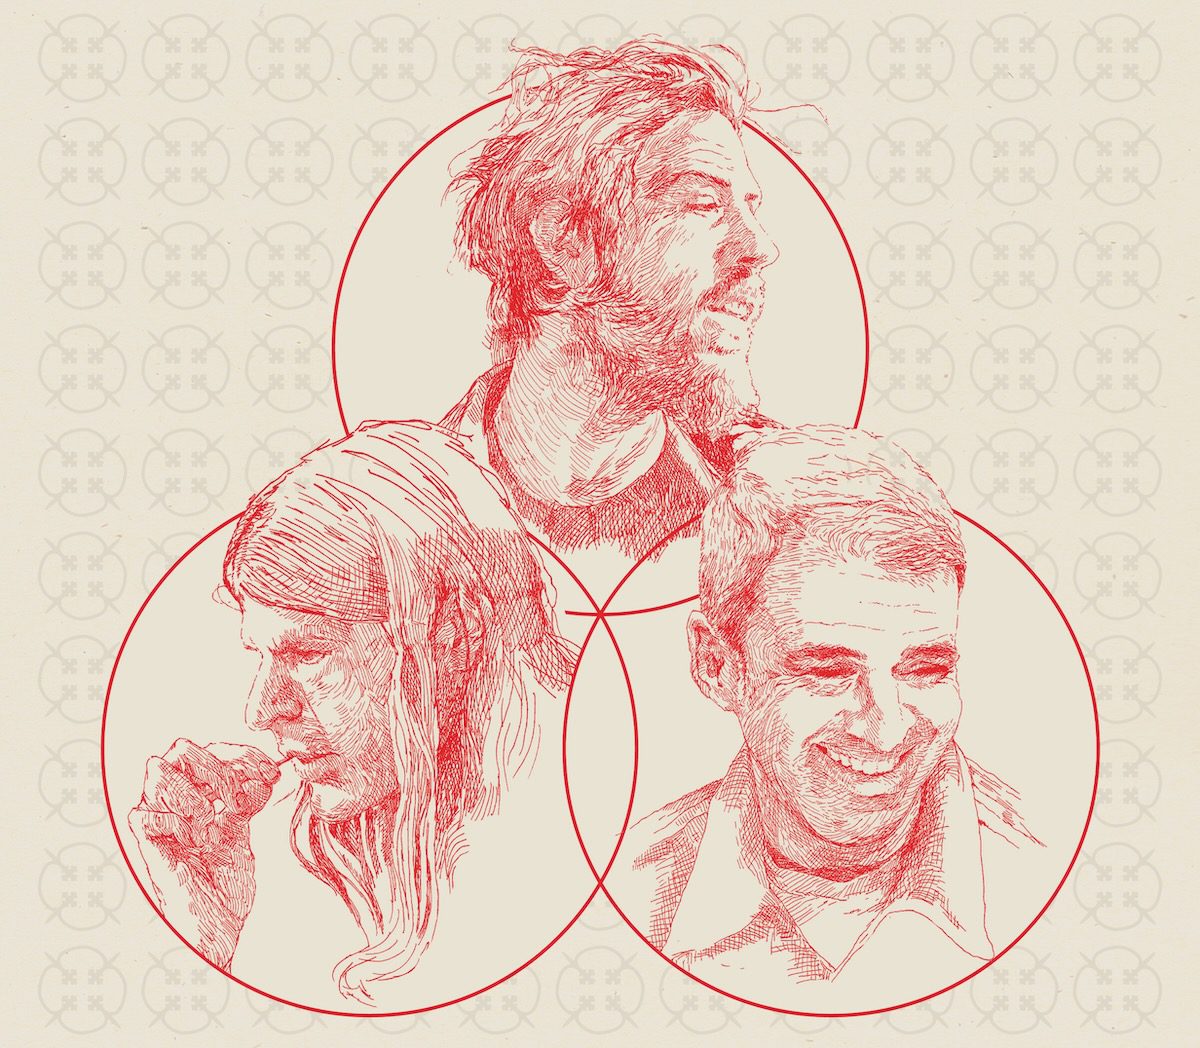 An illustration of three faces enclosed by interlocking circles